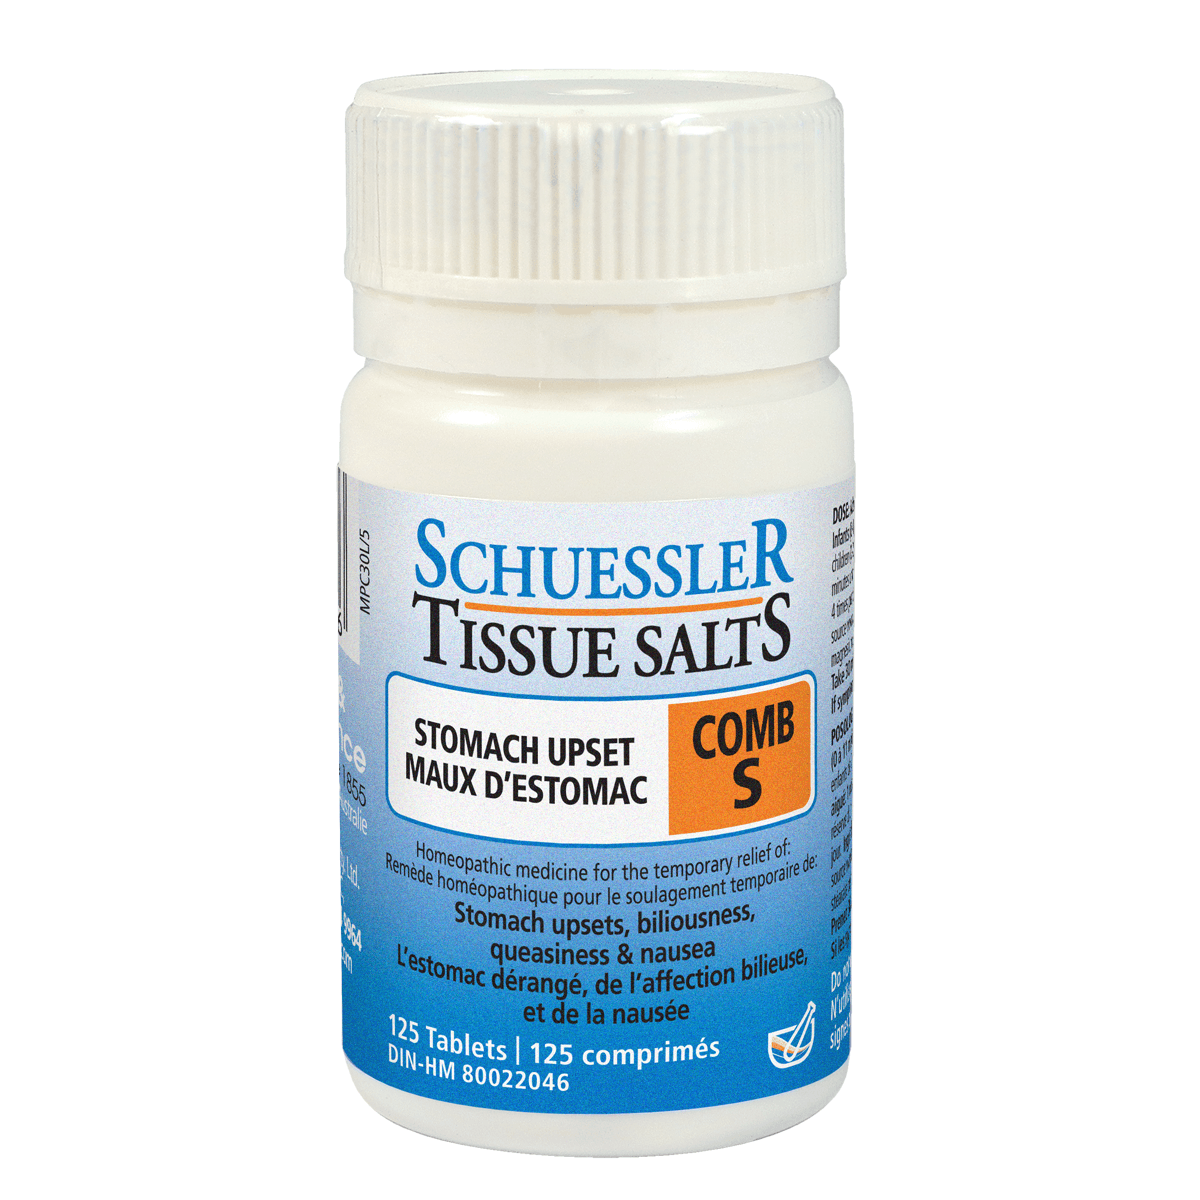 Schuessler Tissue Salts COMB S 6X 125t